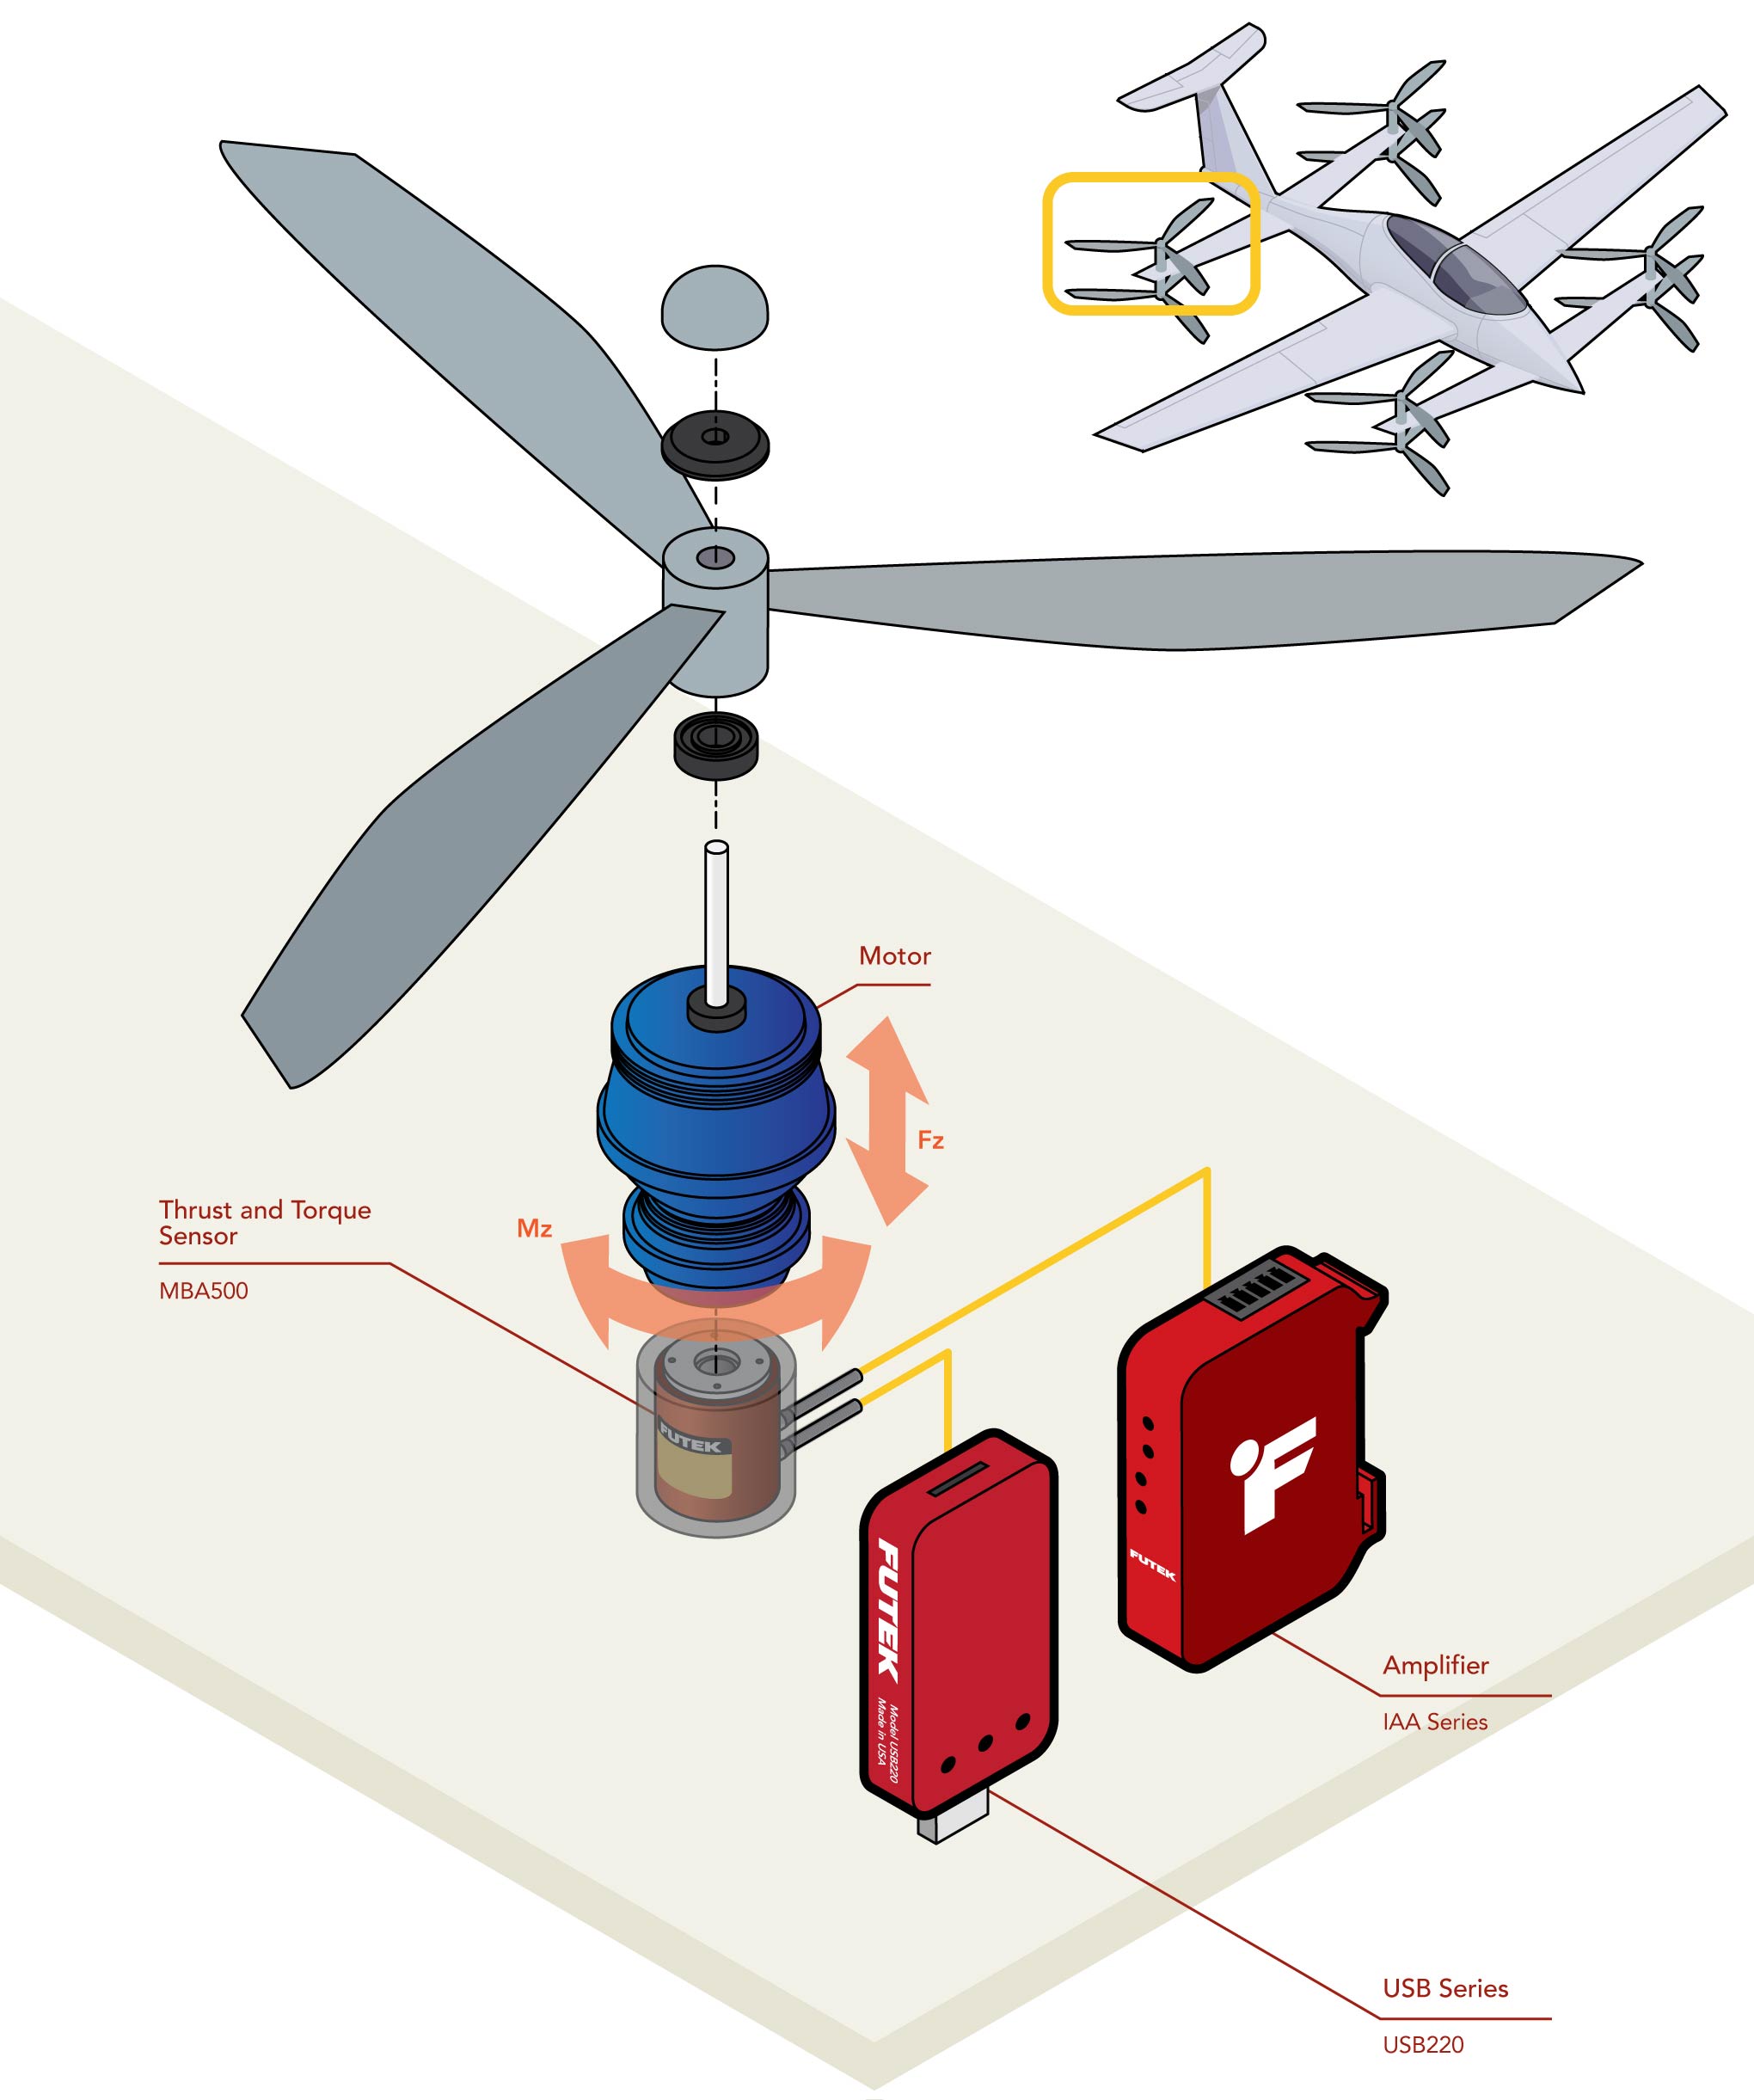 How to measure thrust of a propeller thrust measurement shaft torque VTOL eVTOL